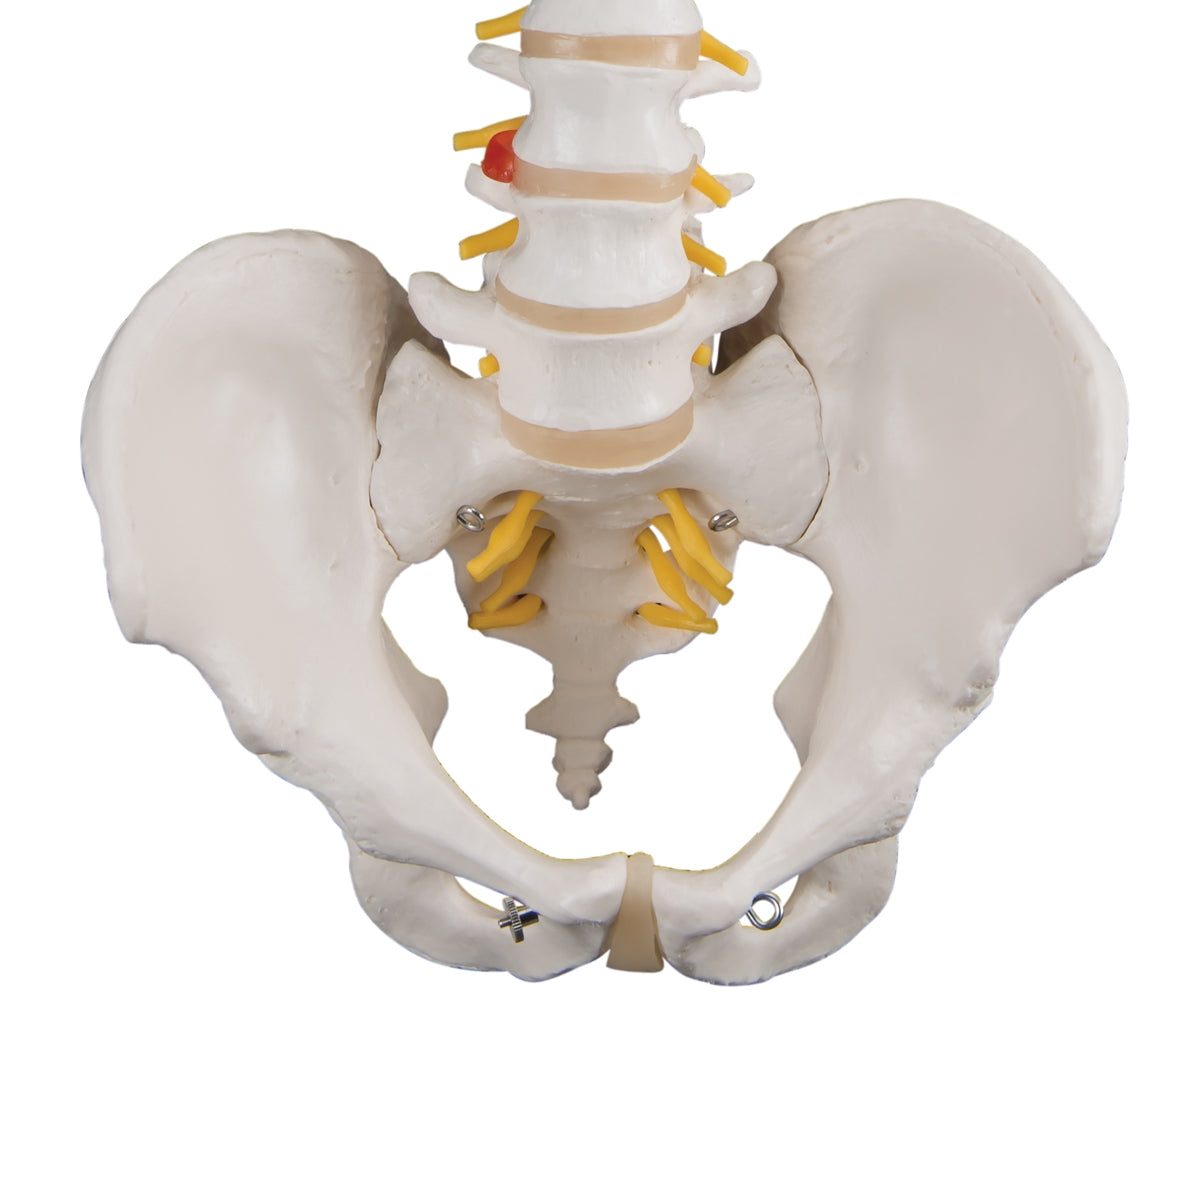 lassic Flexible Human Spine Model